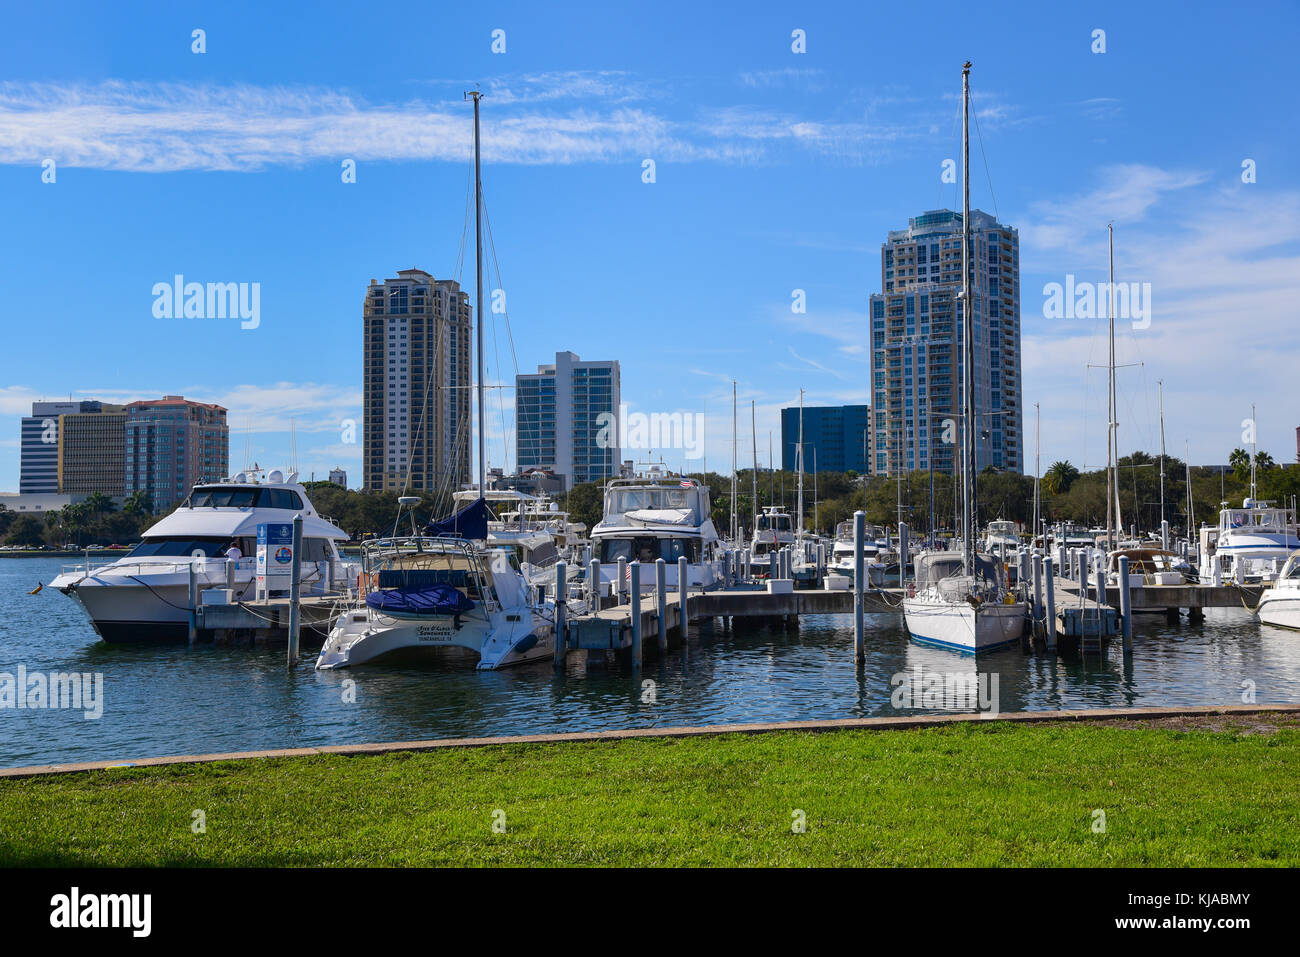 Tampa bay florida fotografías e imágenes de alta resolución - Alamy